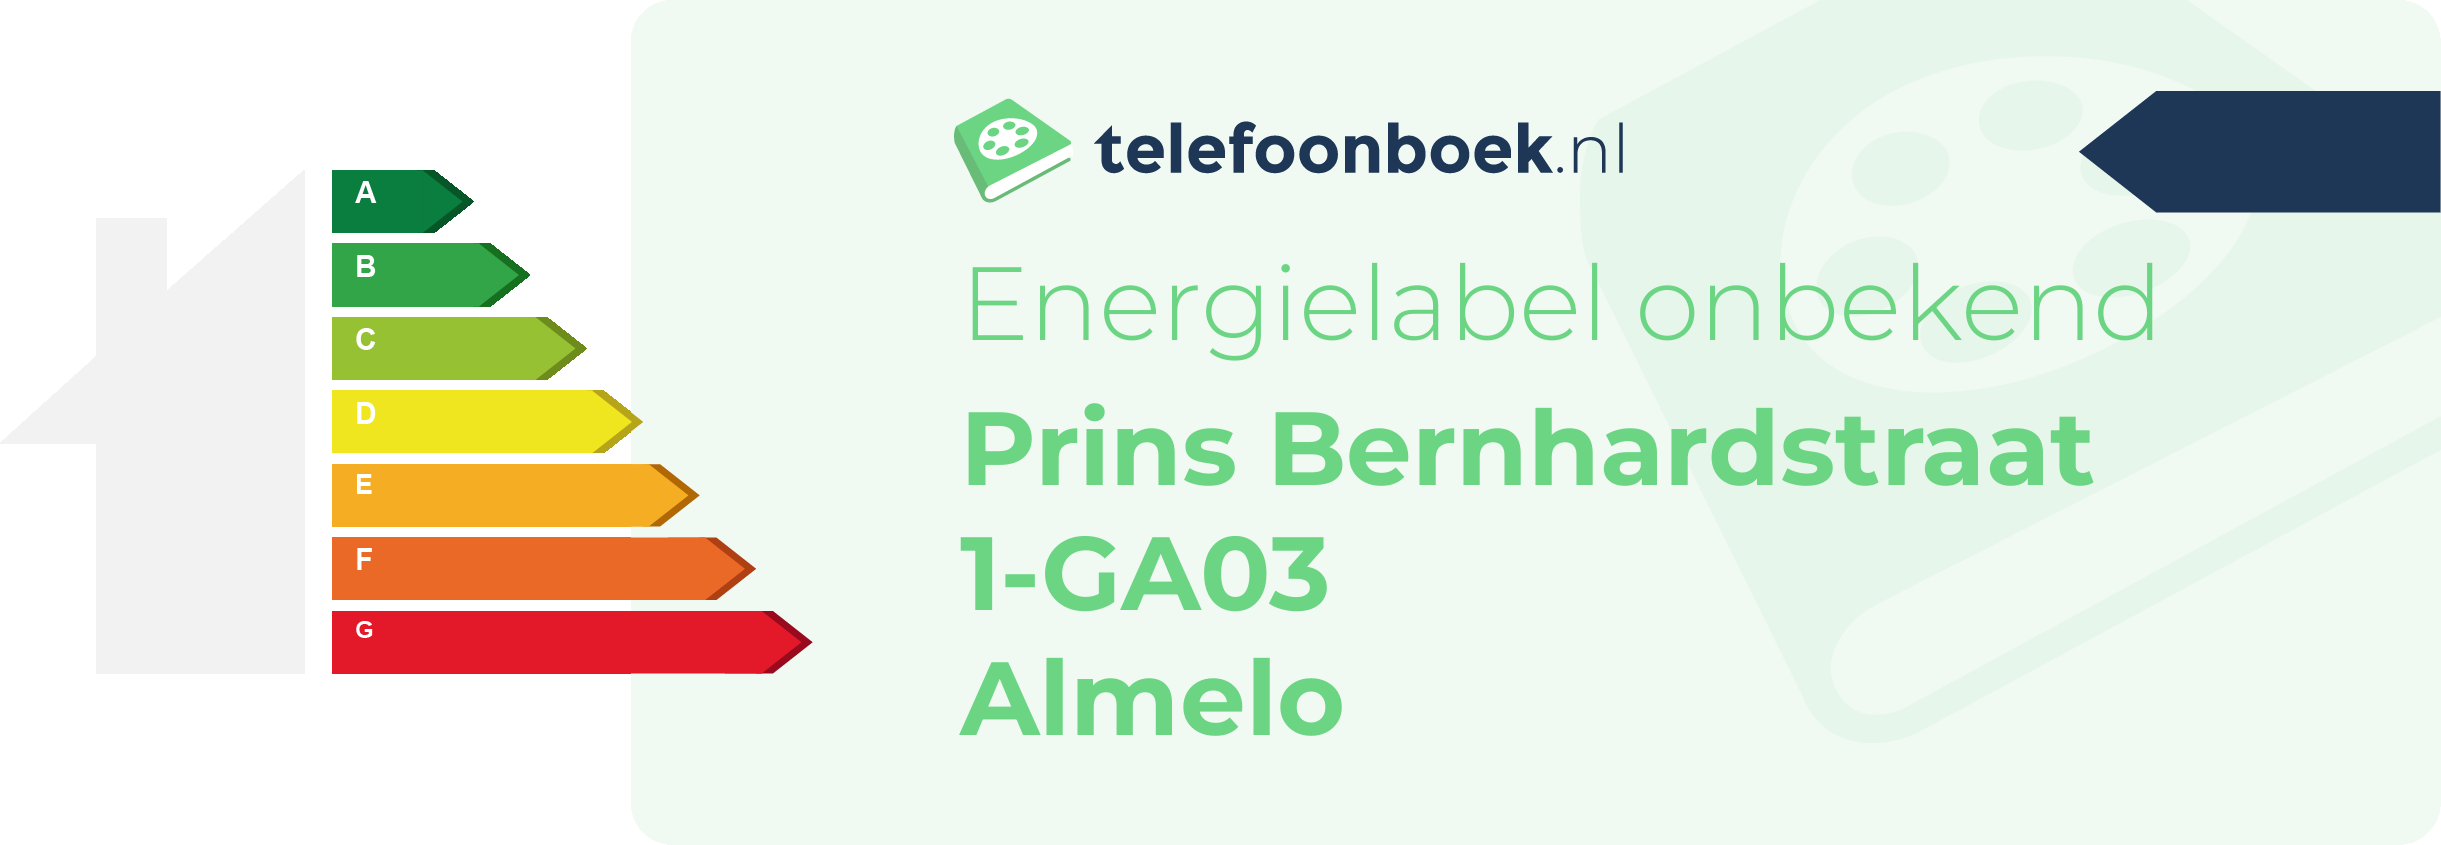 Energielabel Prins Bernhardstraat 1-GA03 Almelo